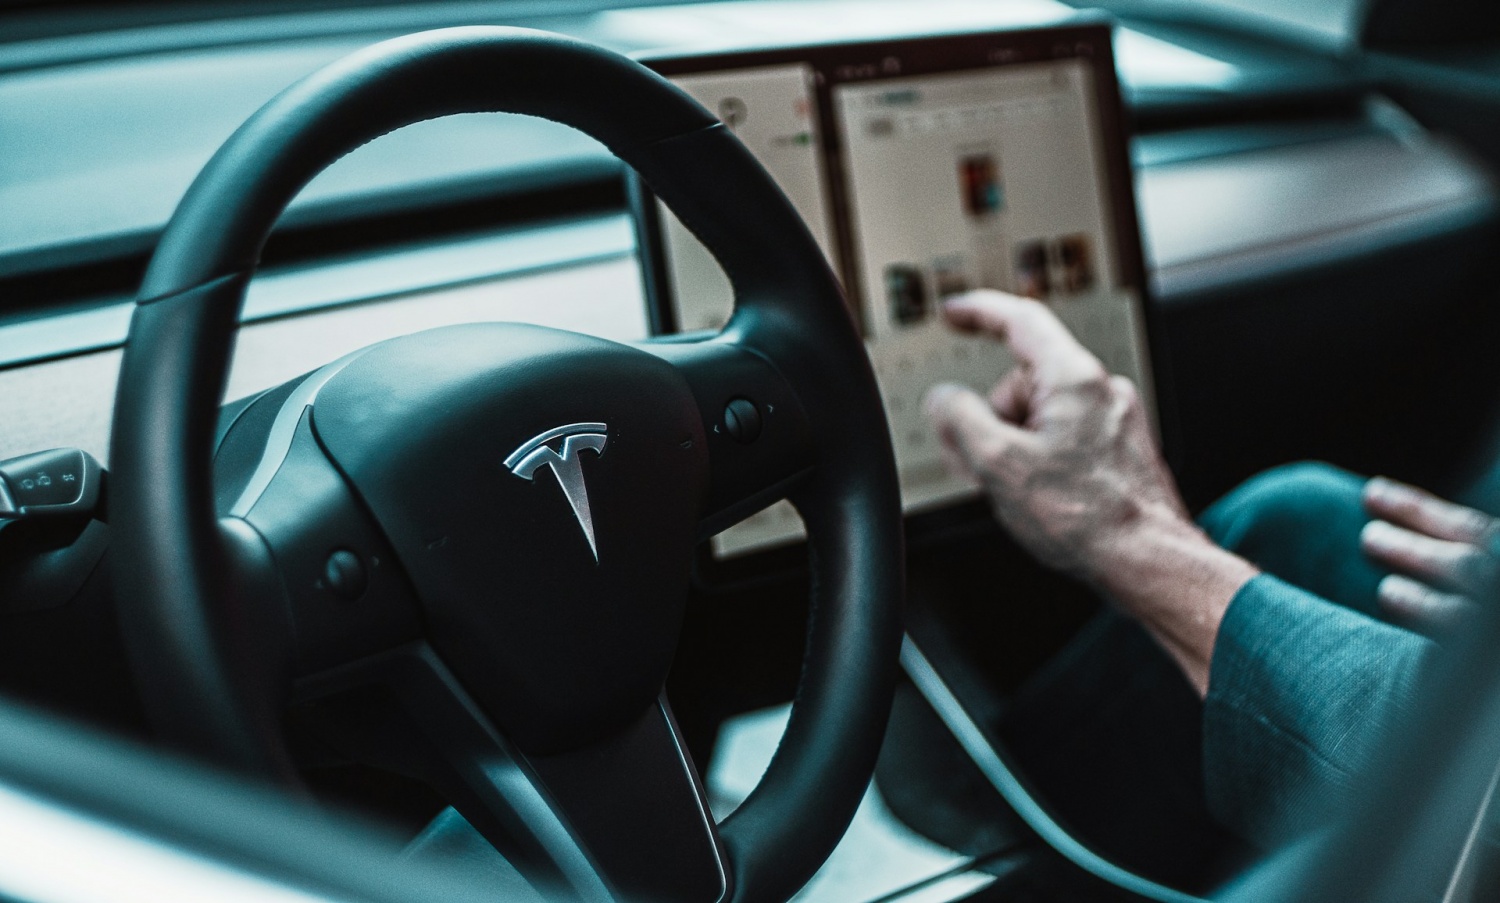 U.S. Prosecutors Investigate Tesla's Claims on Self-Driving Technology